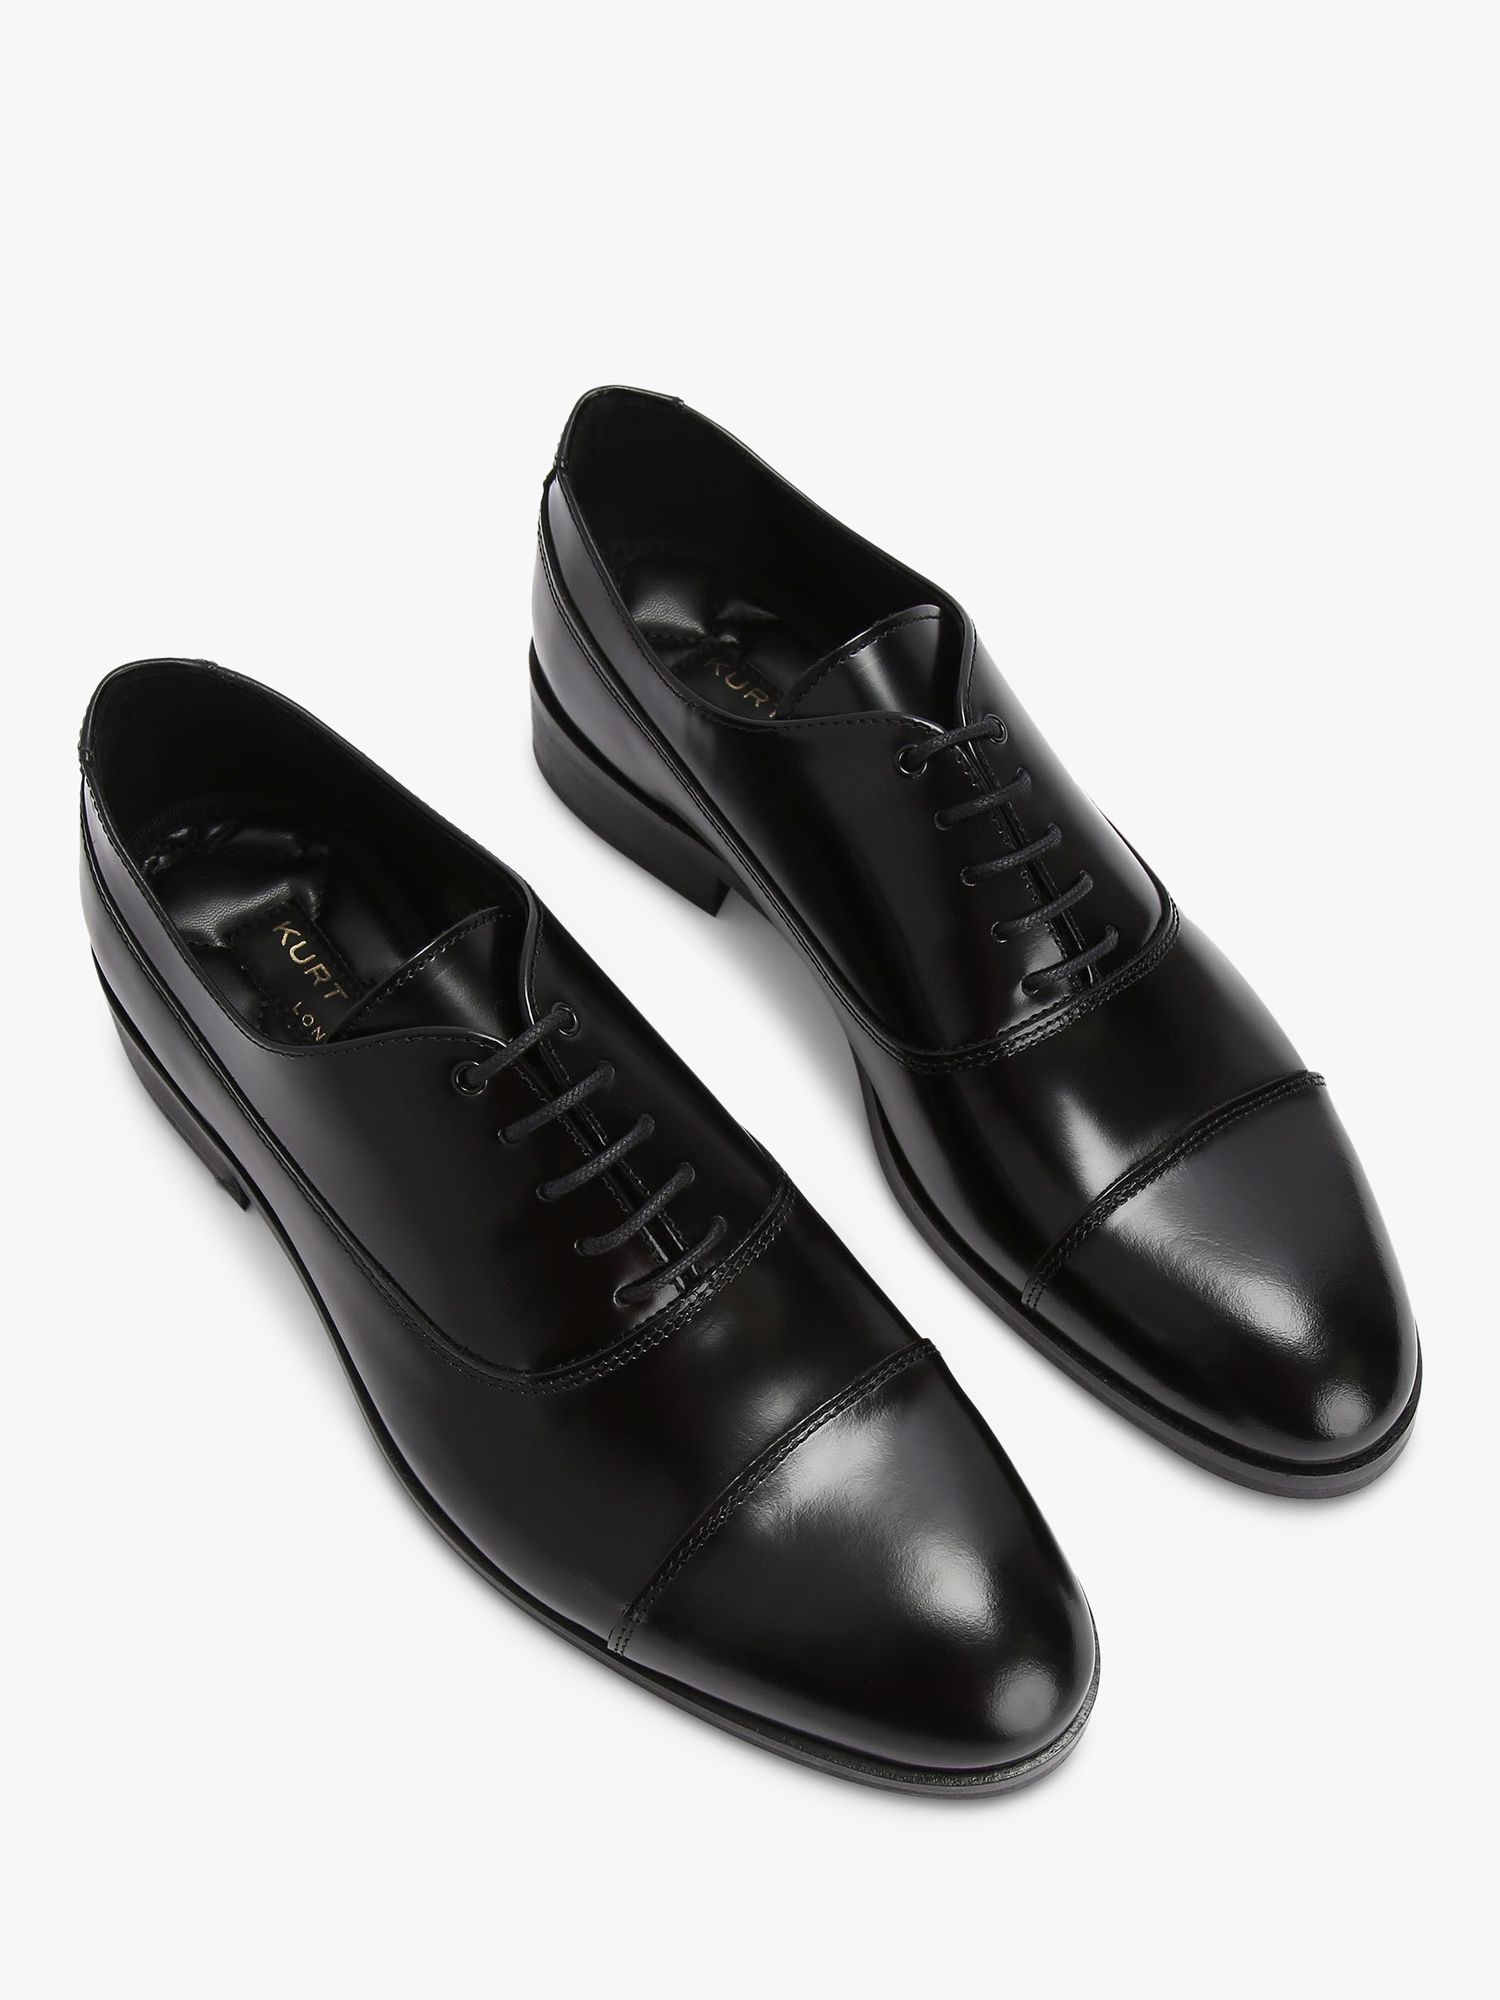 Kurt Geiger London Hunter Oxford Shoes, Black, 11